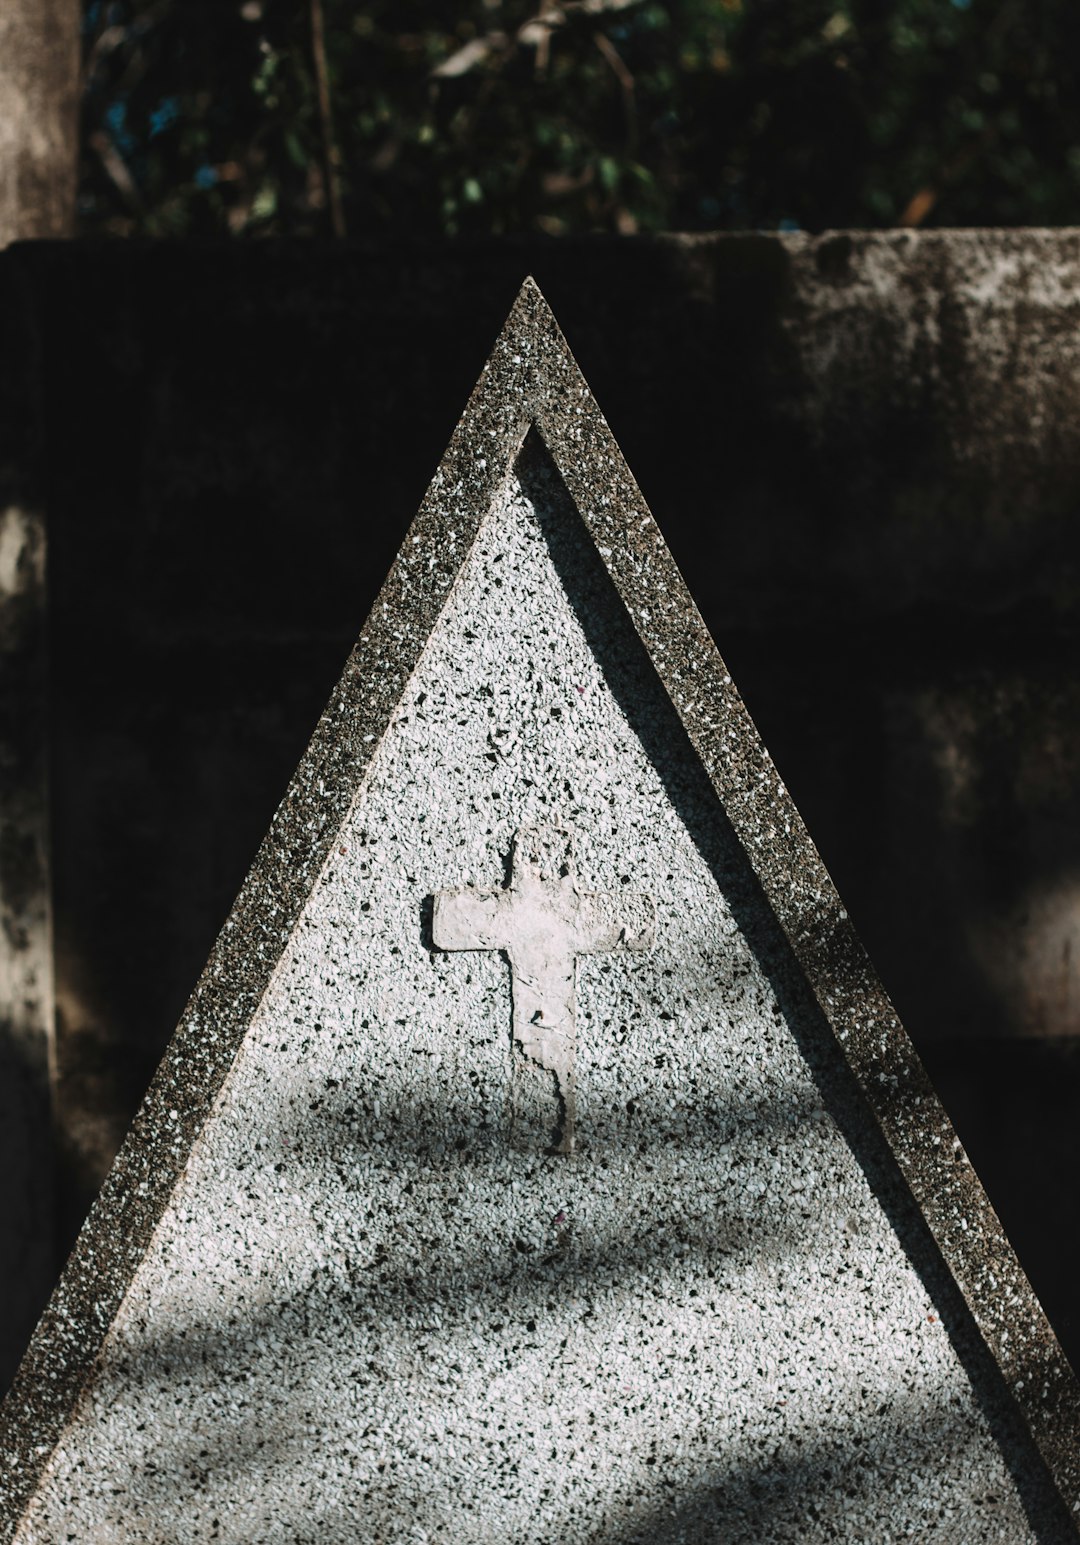 gray concrete cross with cross